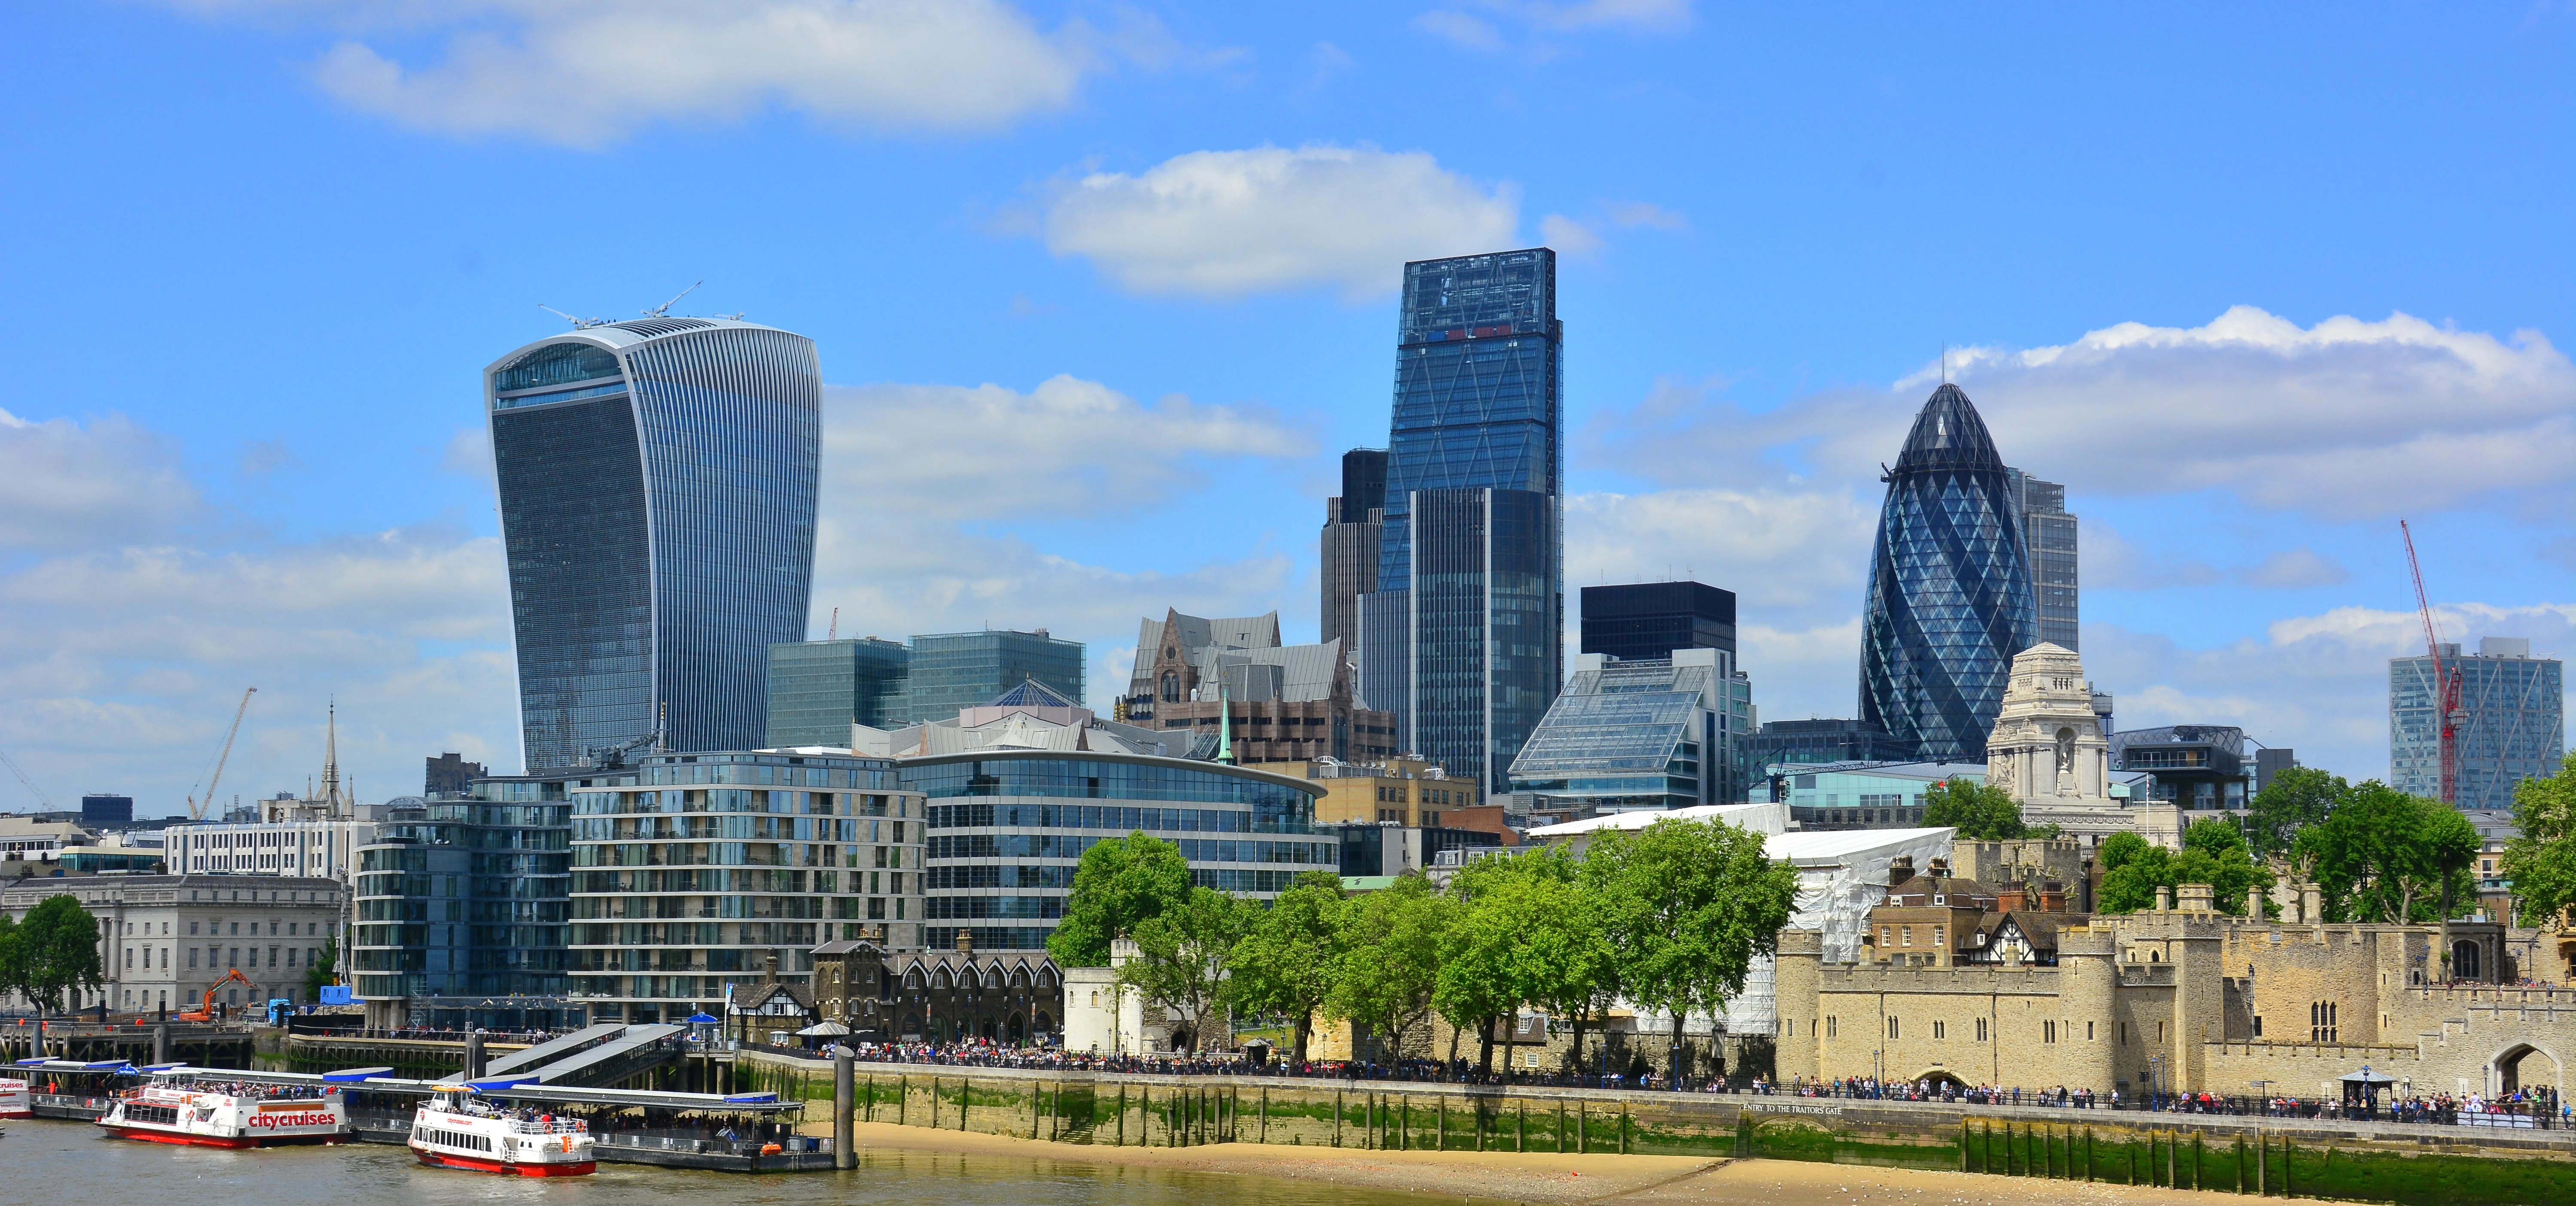 City Of London, London 26-5-2015